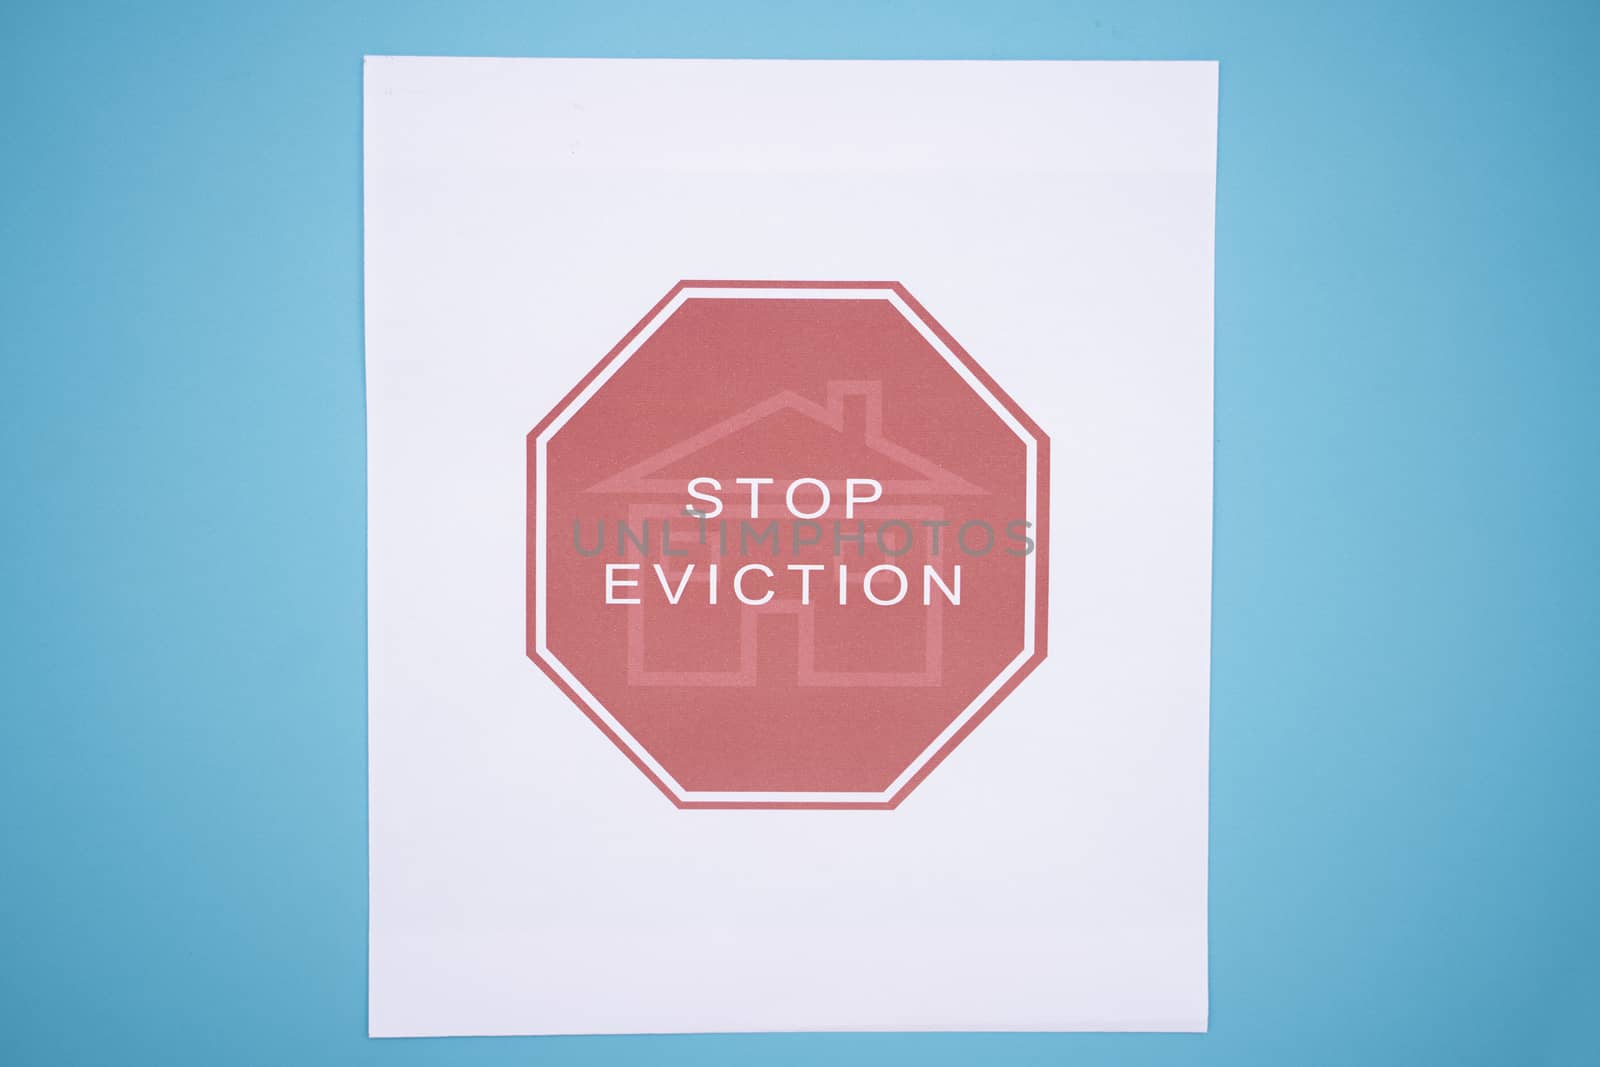 Concept of Tenants Stop Eviction signage printed on grunge textured paper. by lakshmiprasad.maski@gmai.com